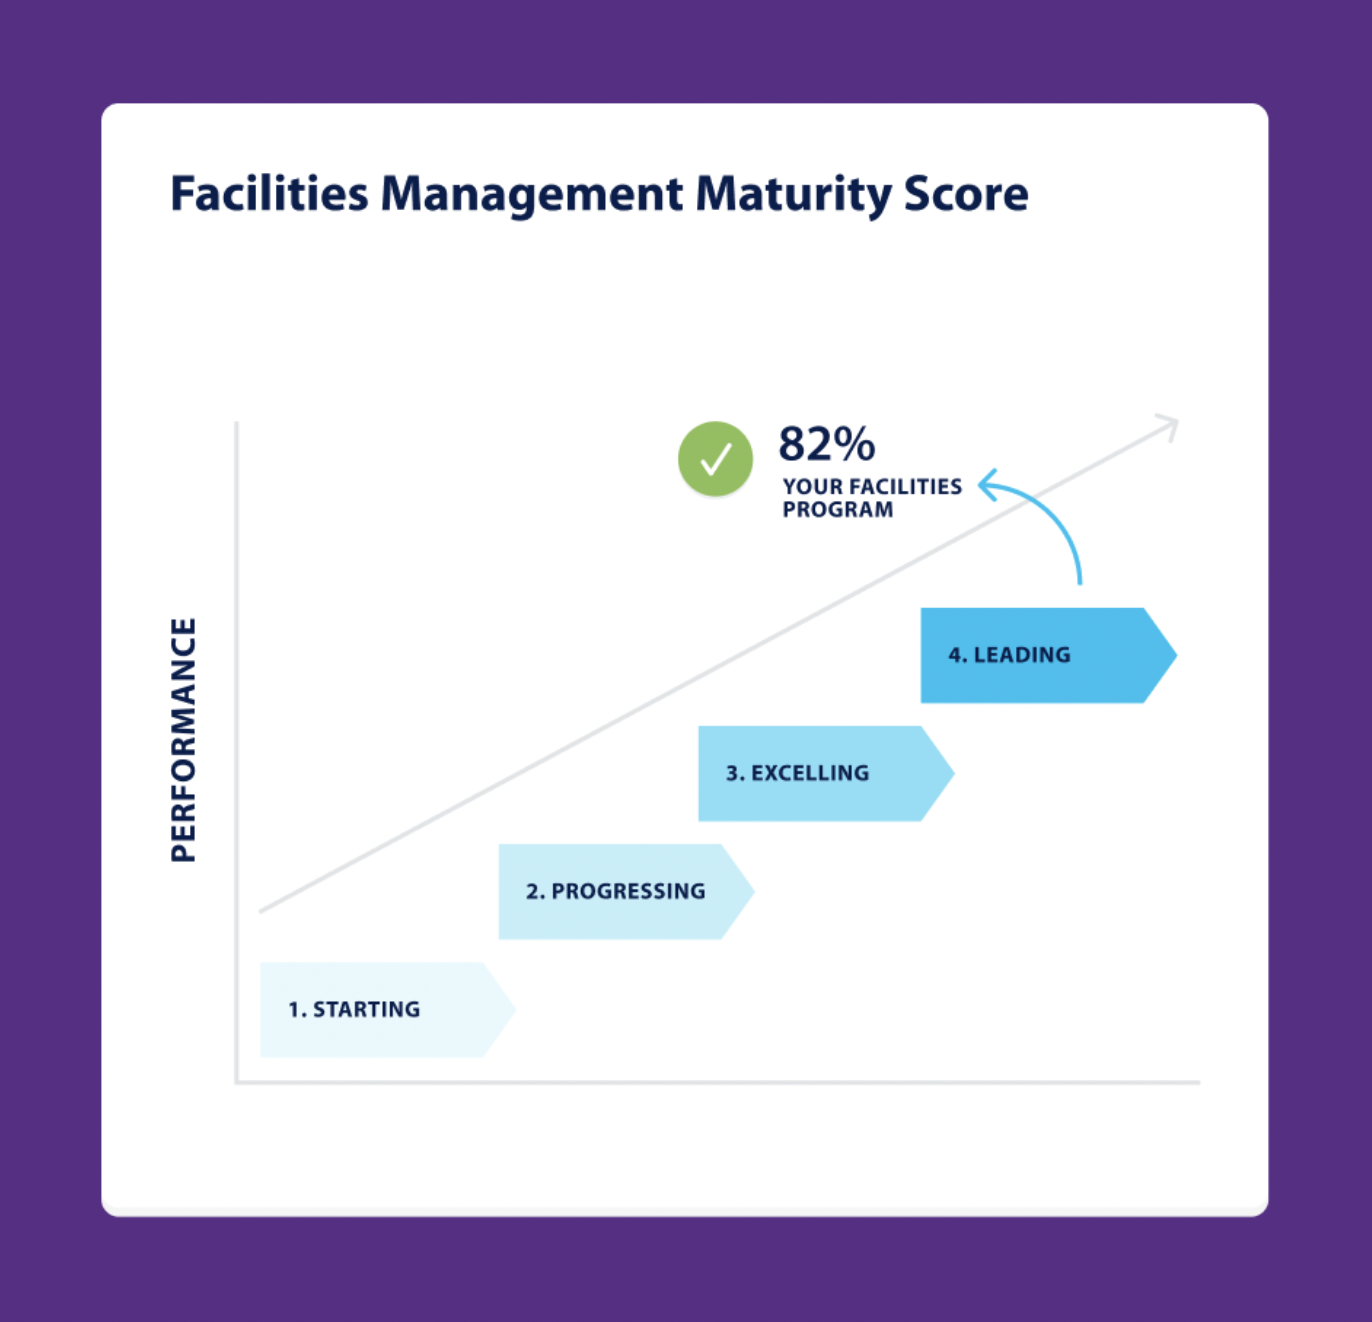 Facilities Management Maturity Score visualized within software platform